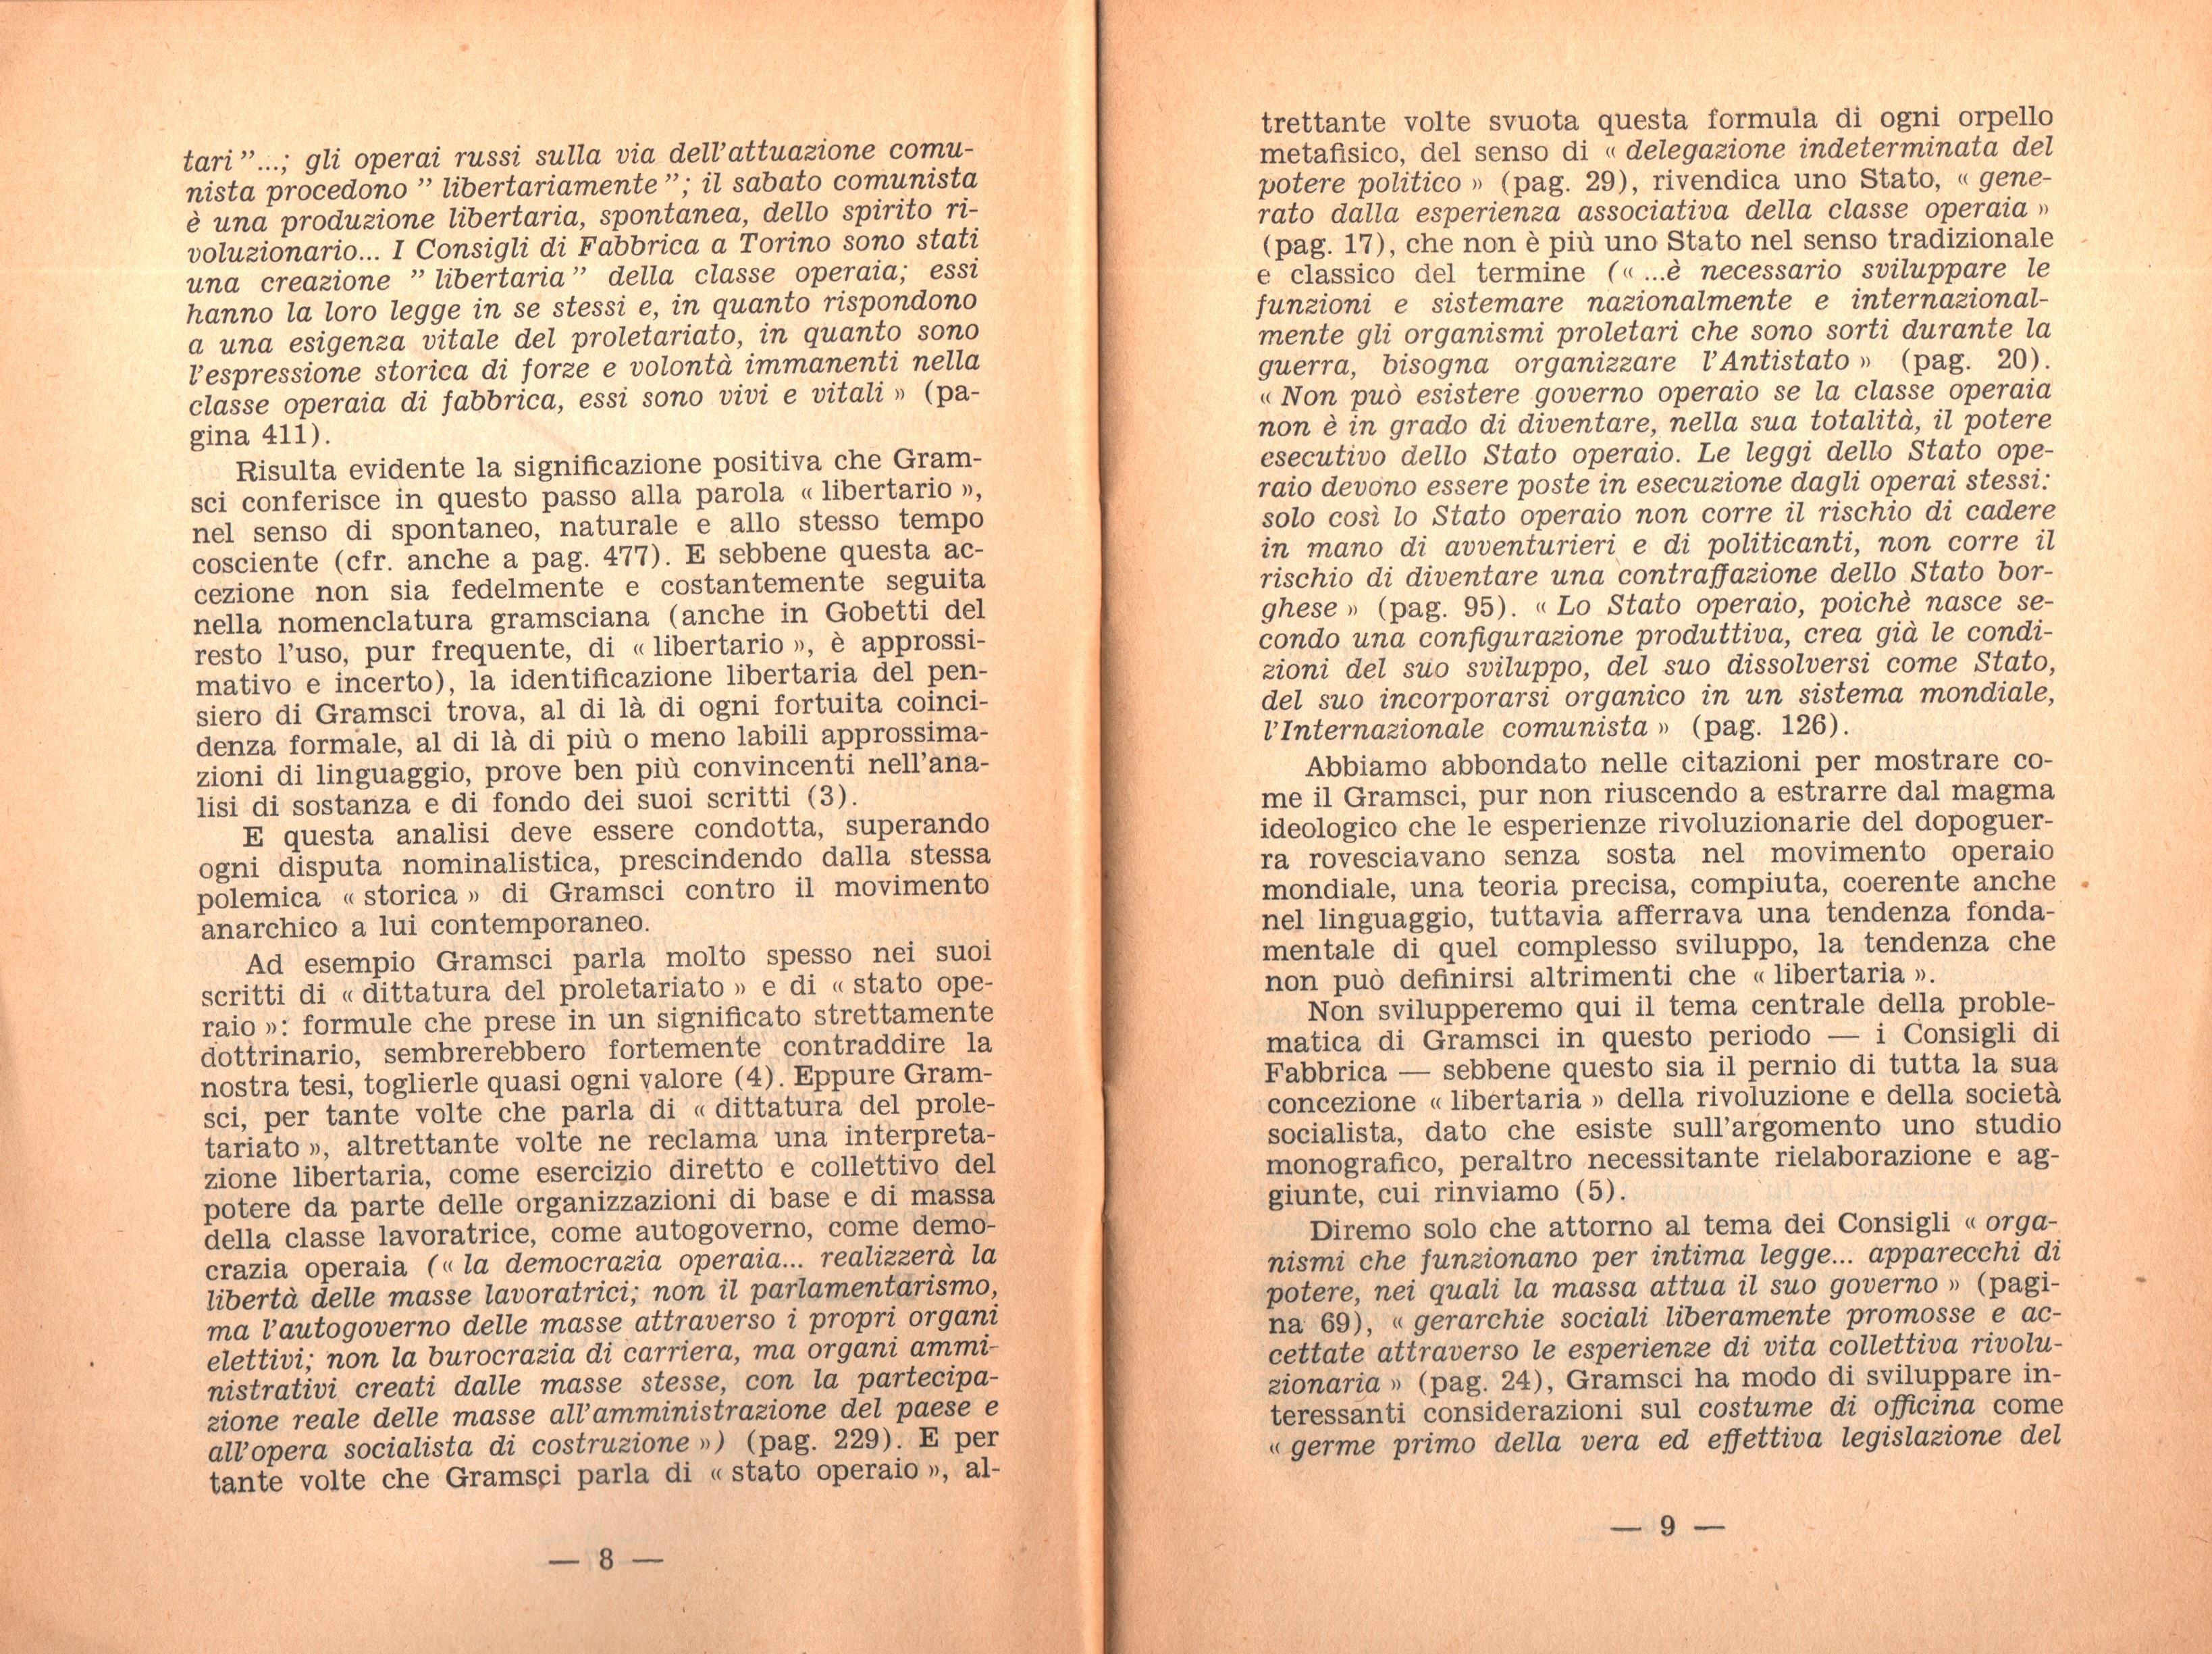 Pier Carlo Masini, Antonio Gramsci - pag. 6